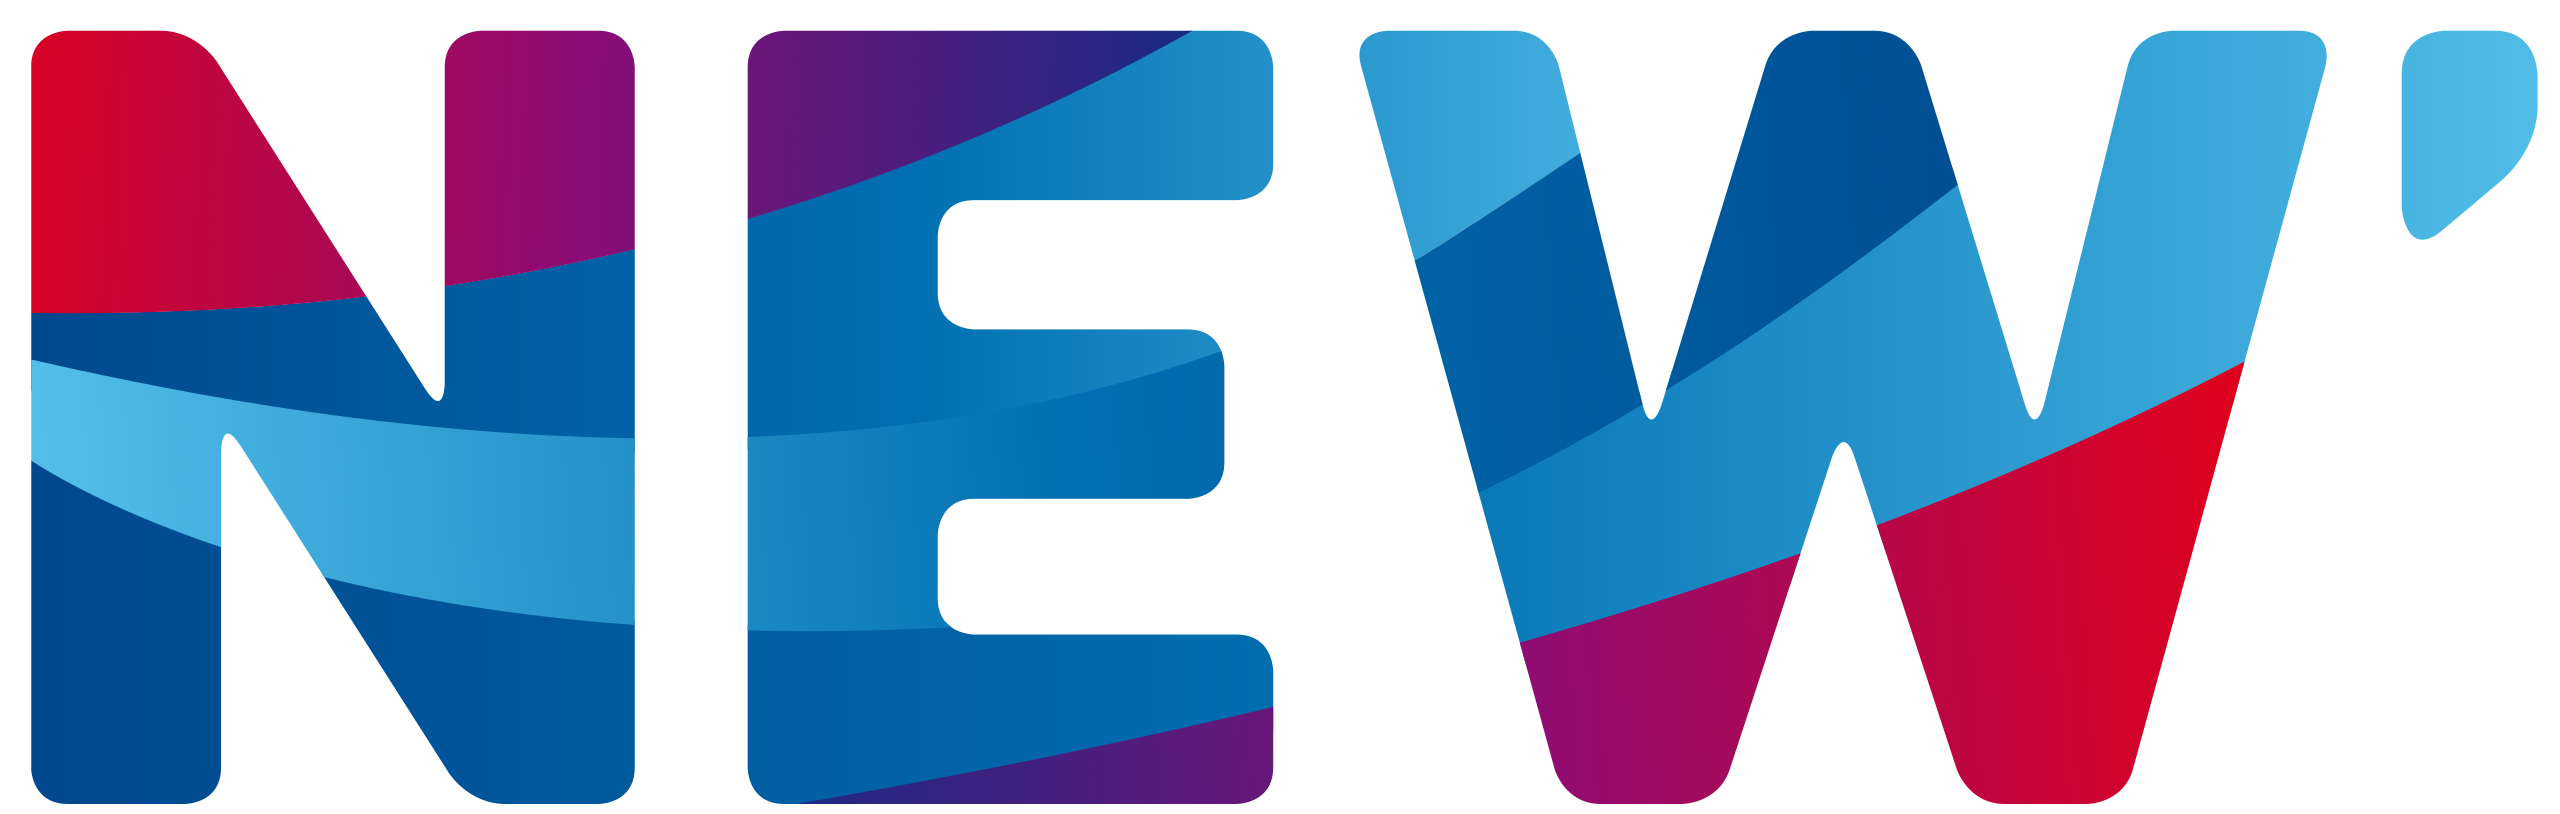 New_logo.svg